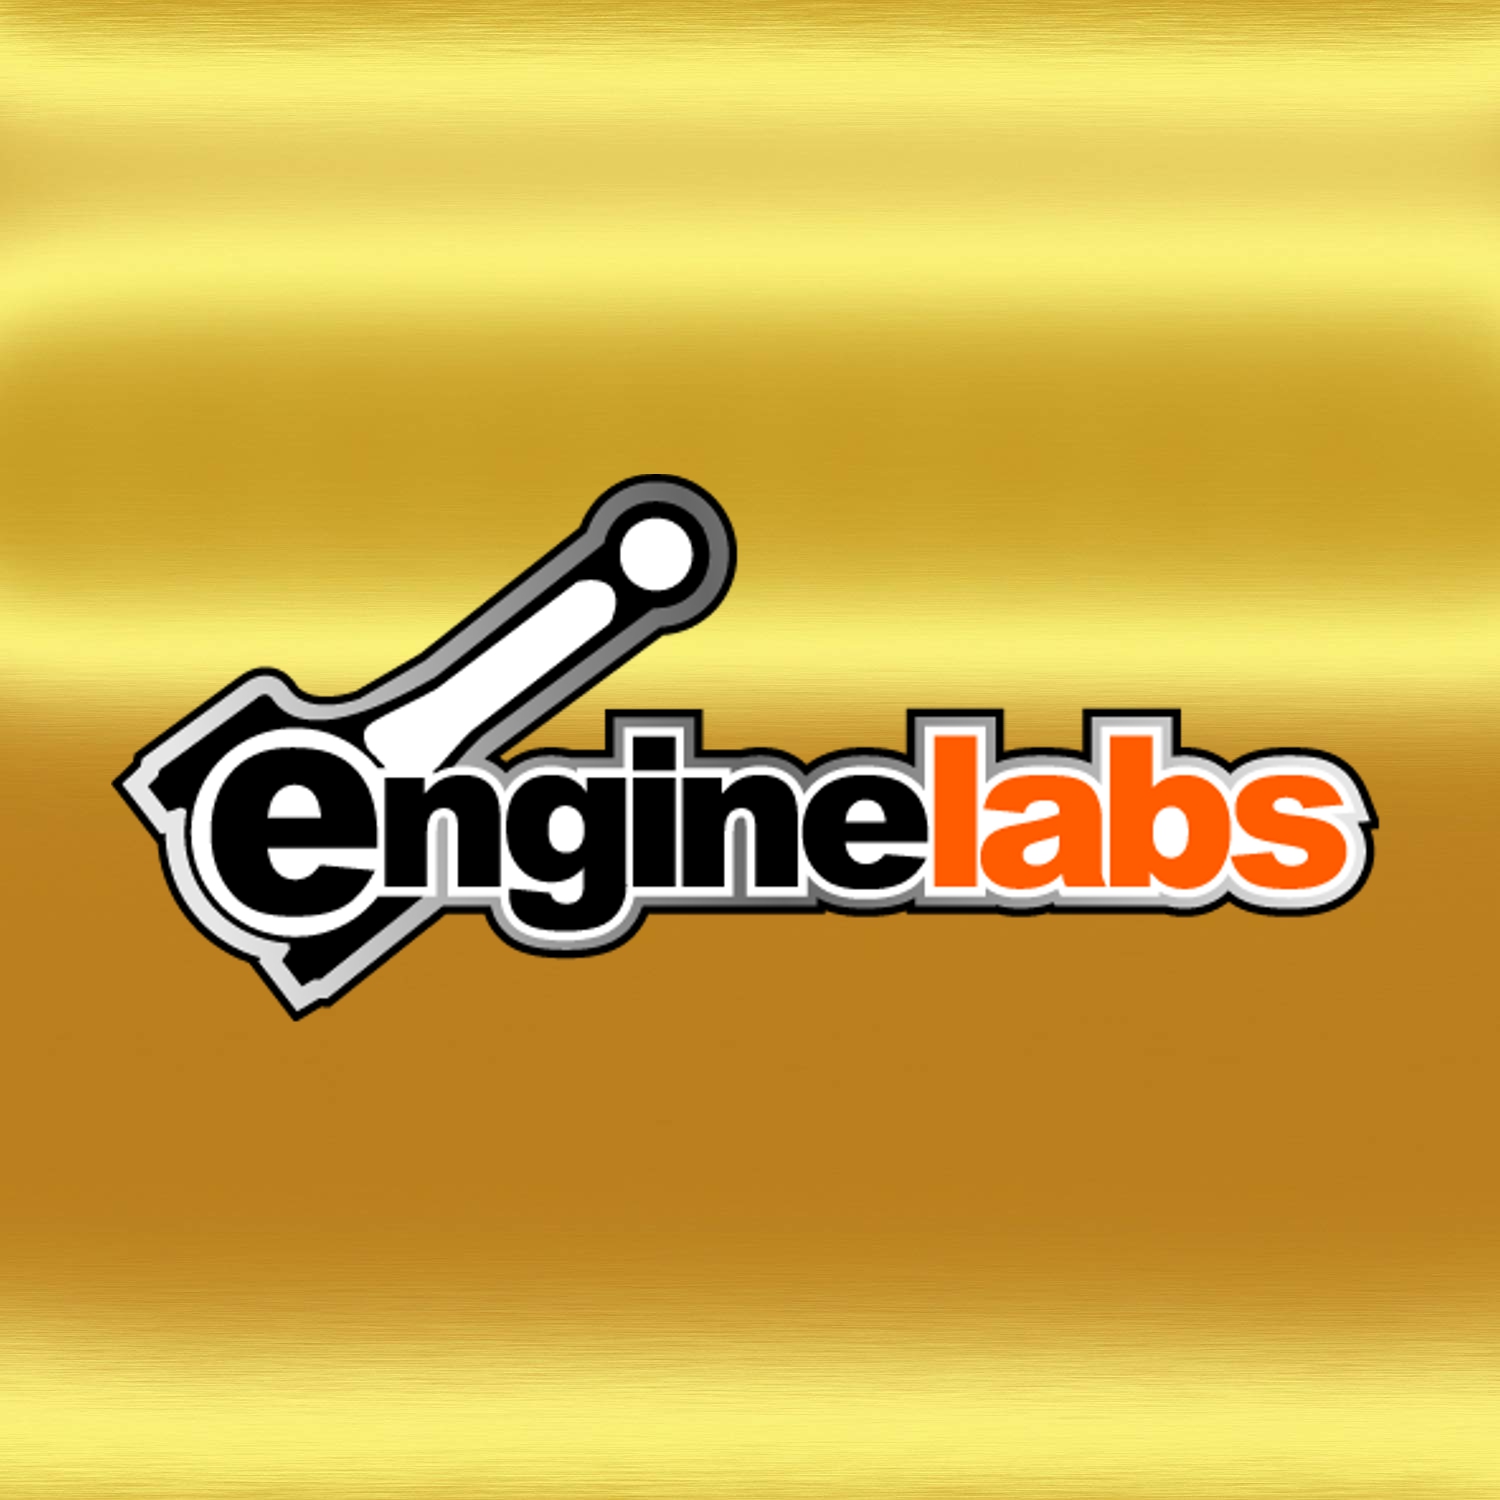 engine labs logo.jpg